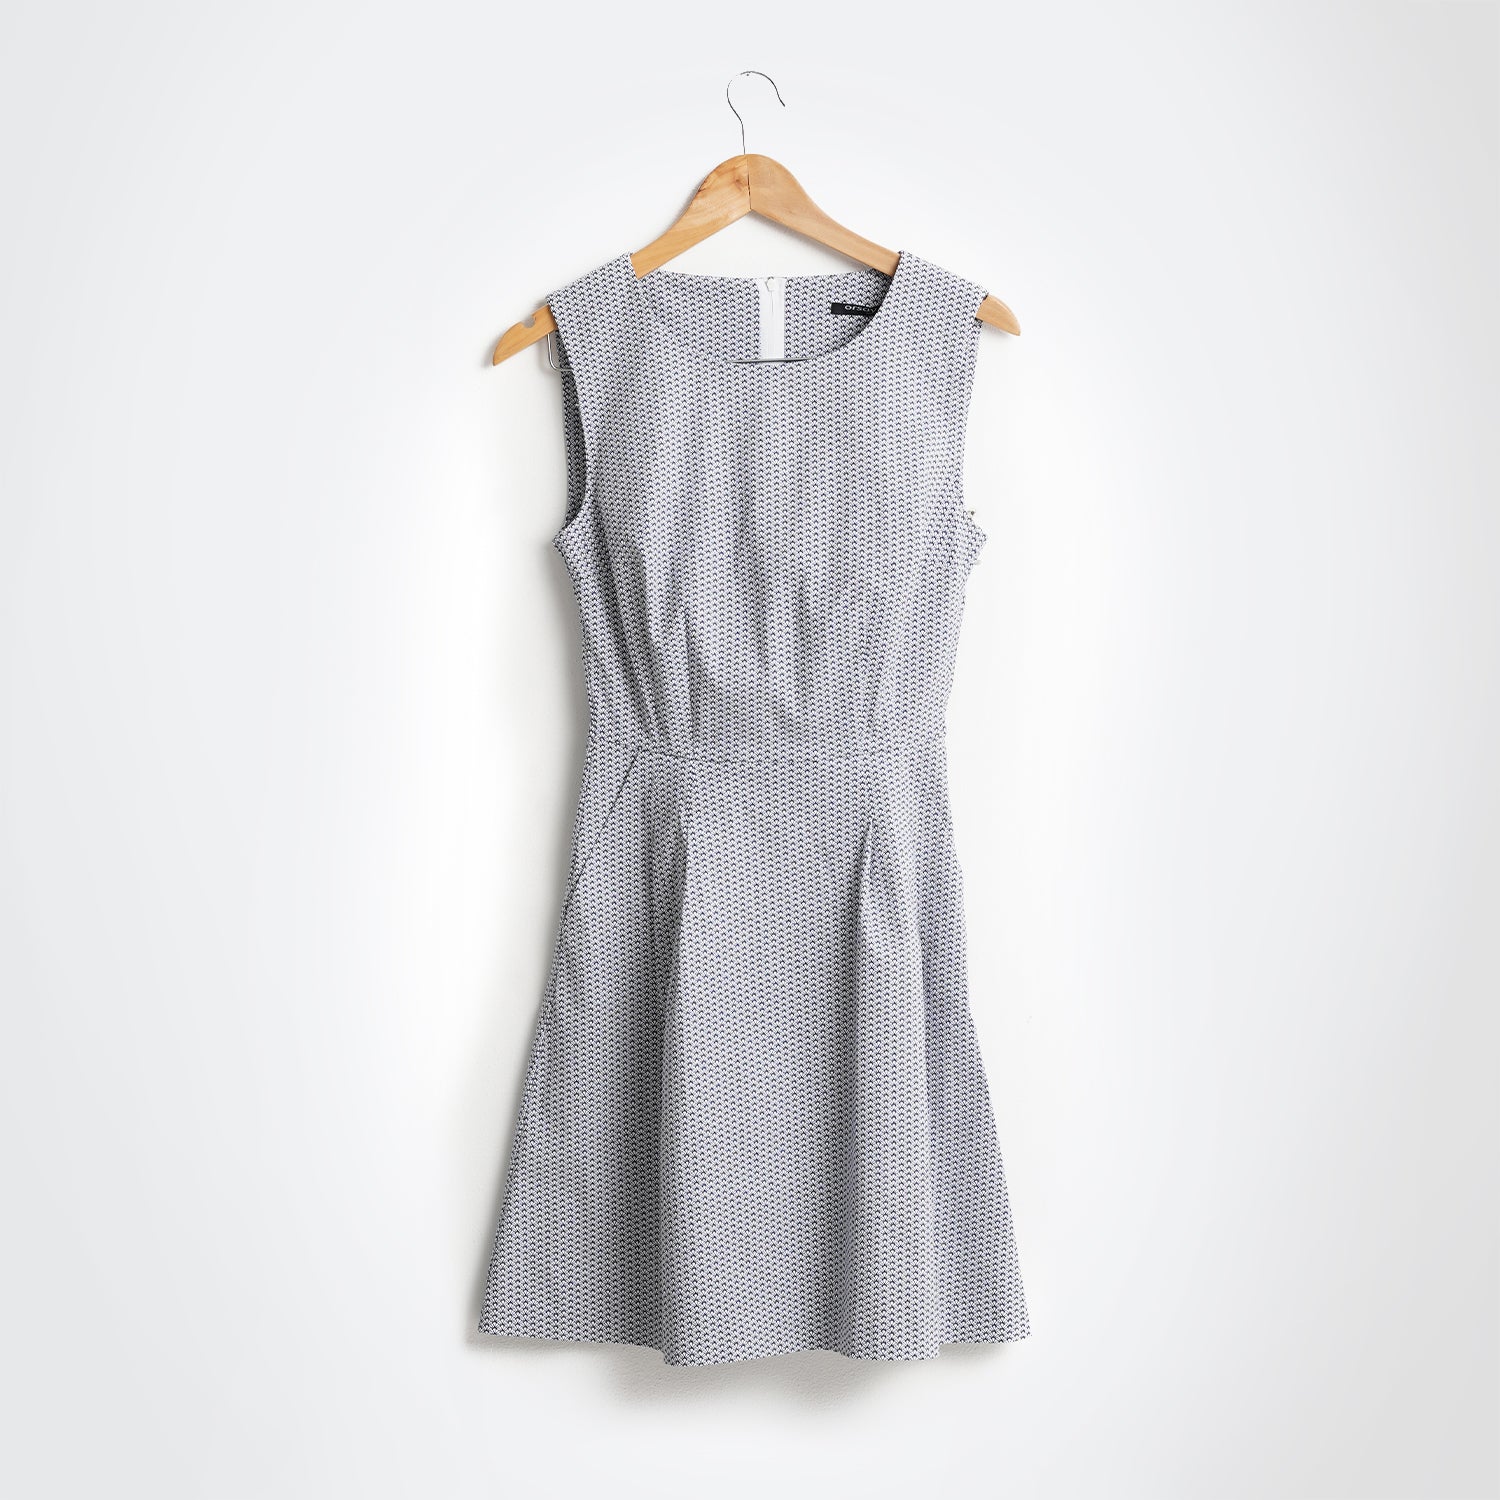 Orsay Patterned Dress - Marca Deals - Orsay